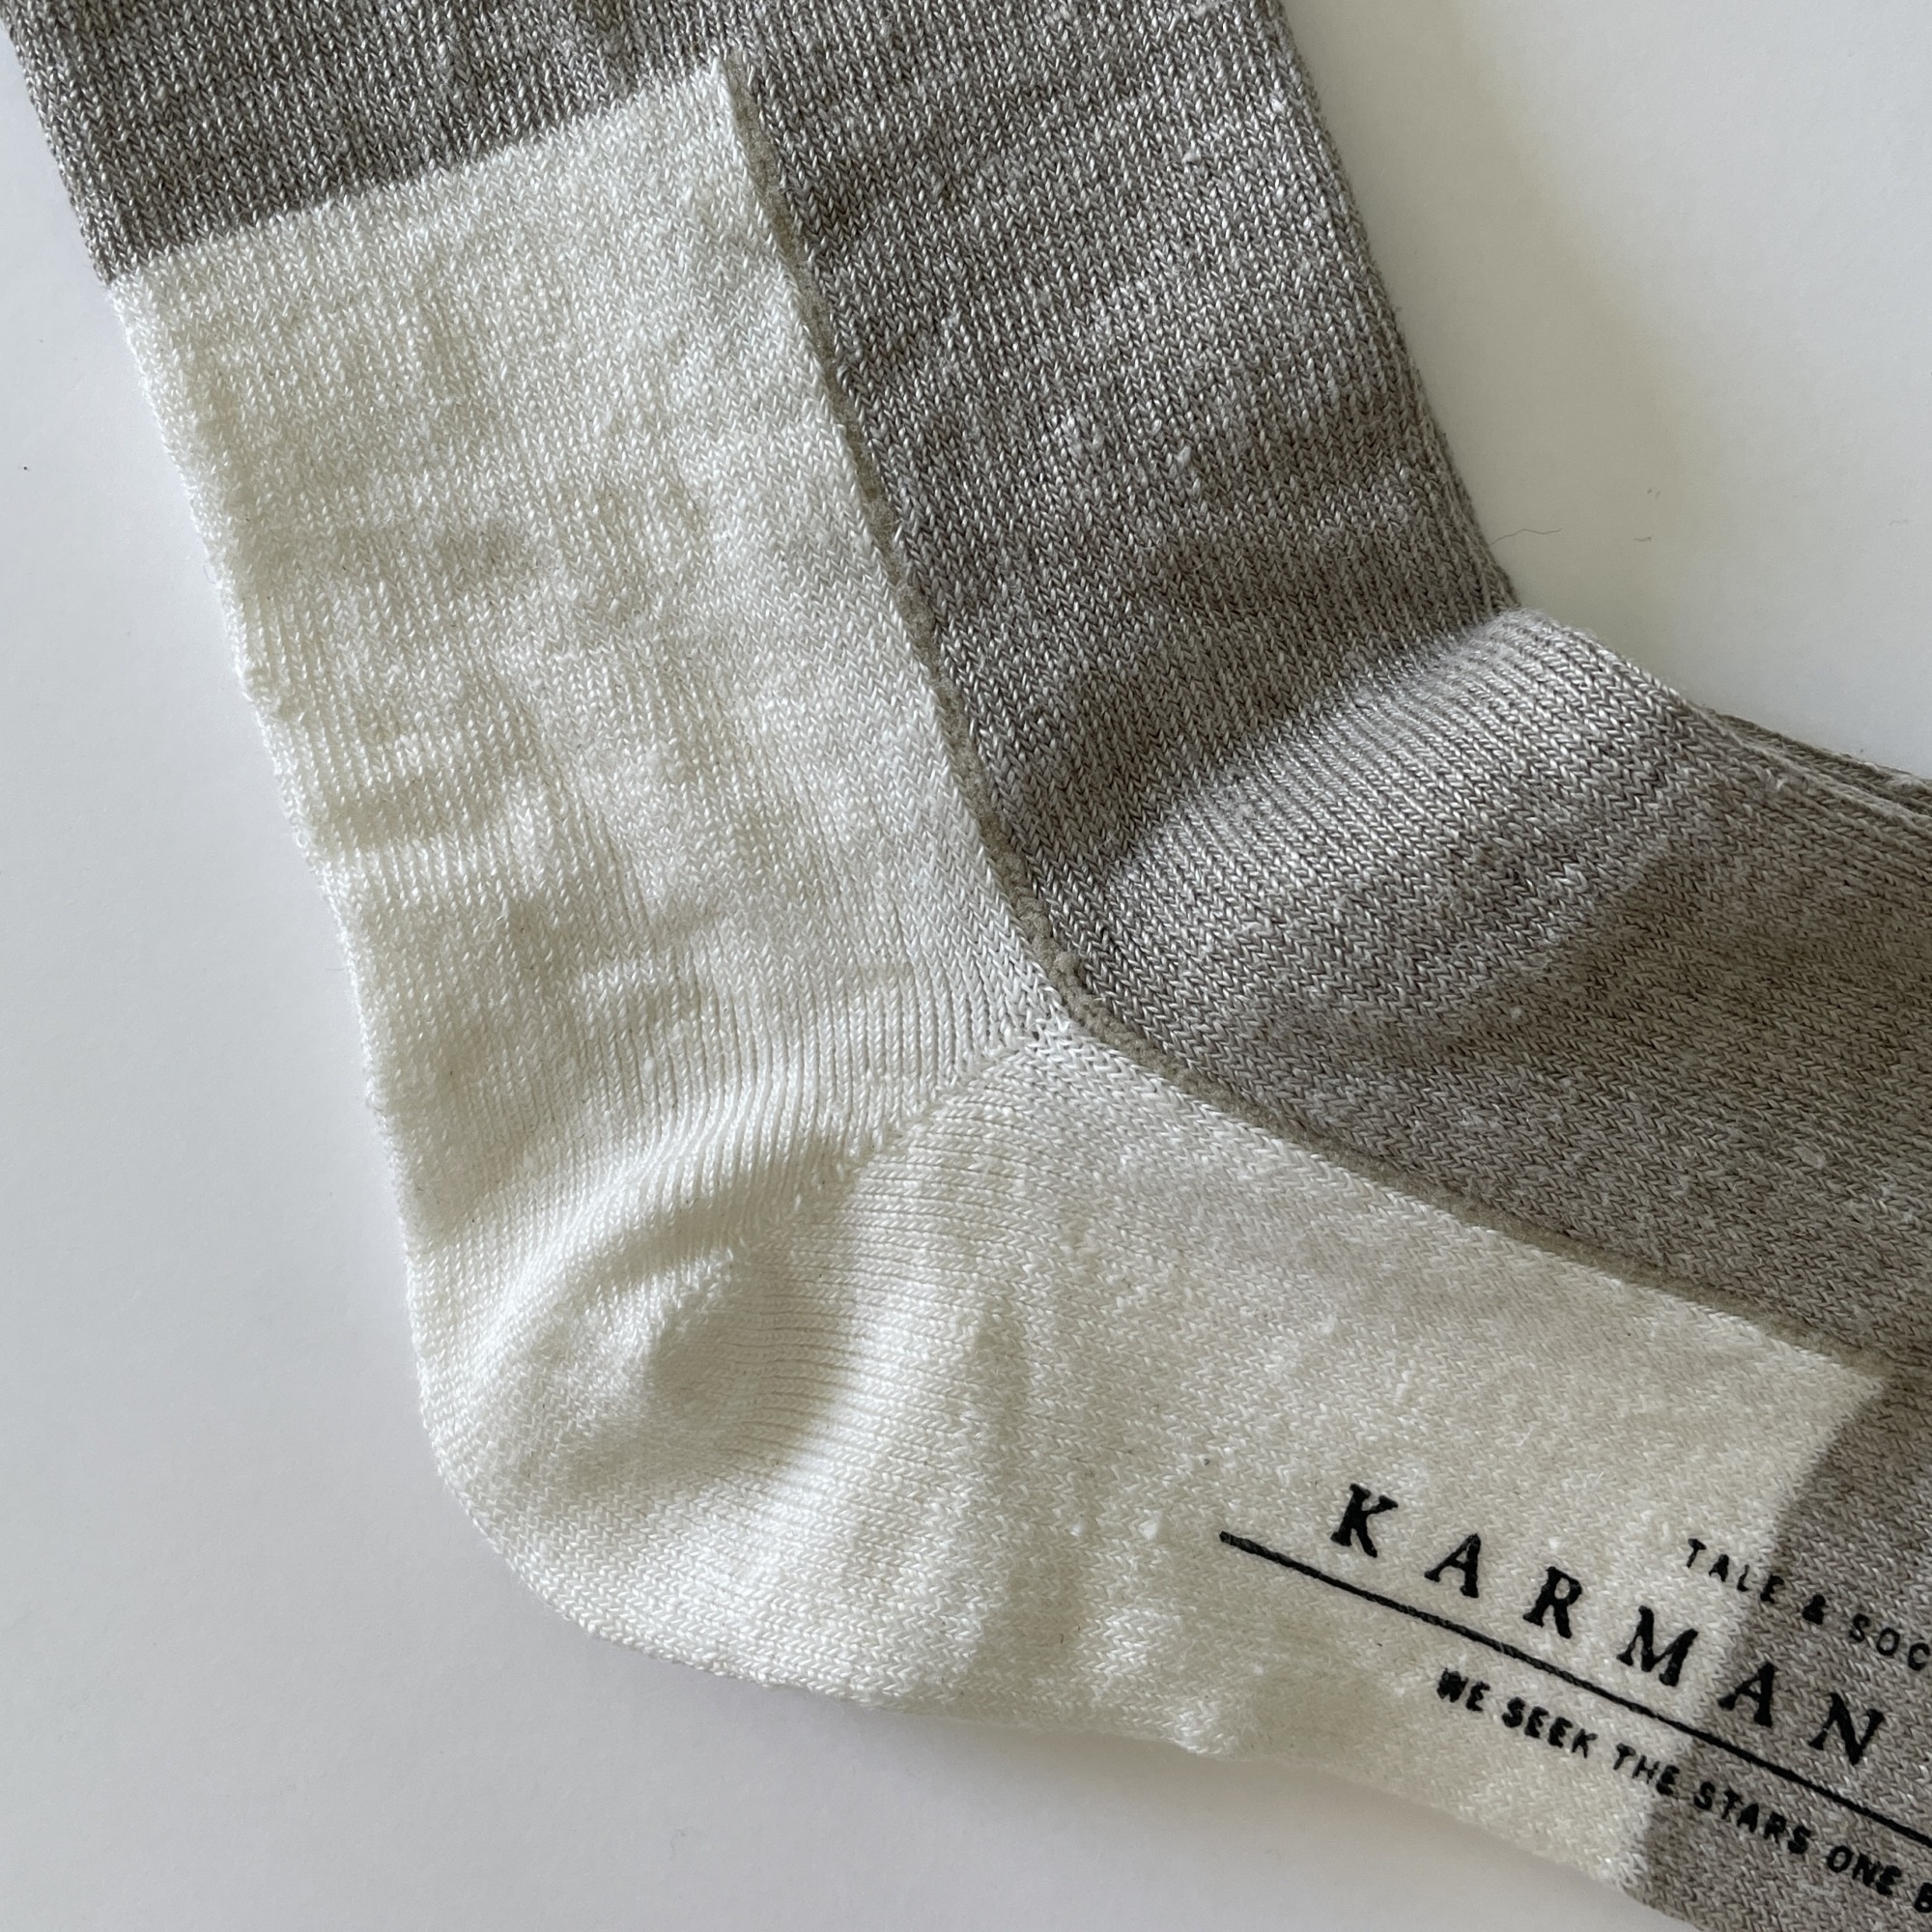 KARMAN LINE GEMINI / Linen socks / Raw & White